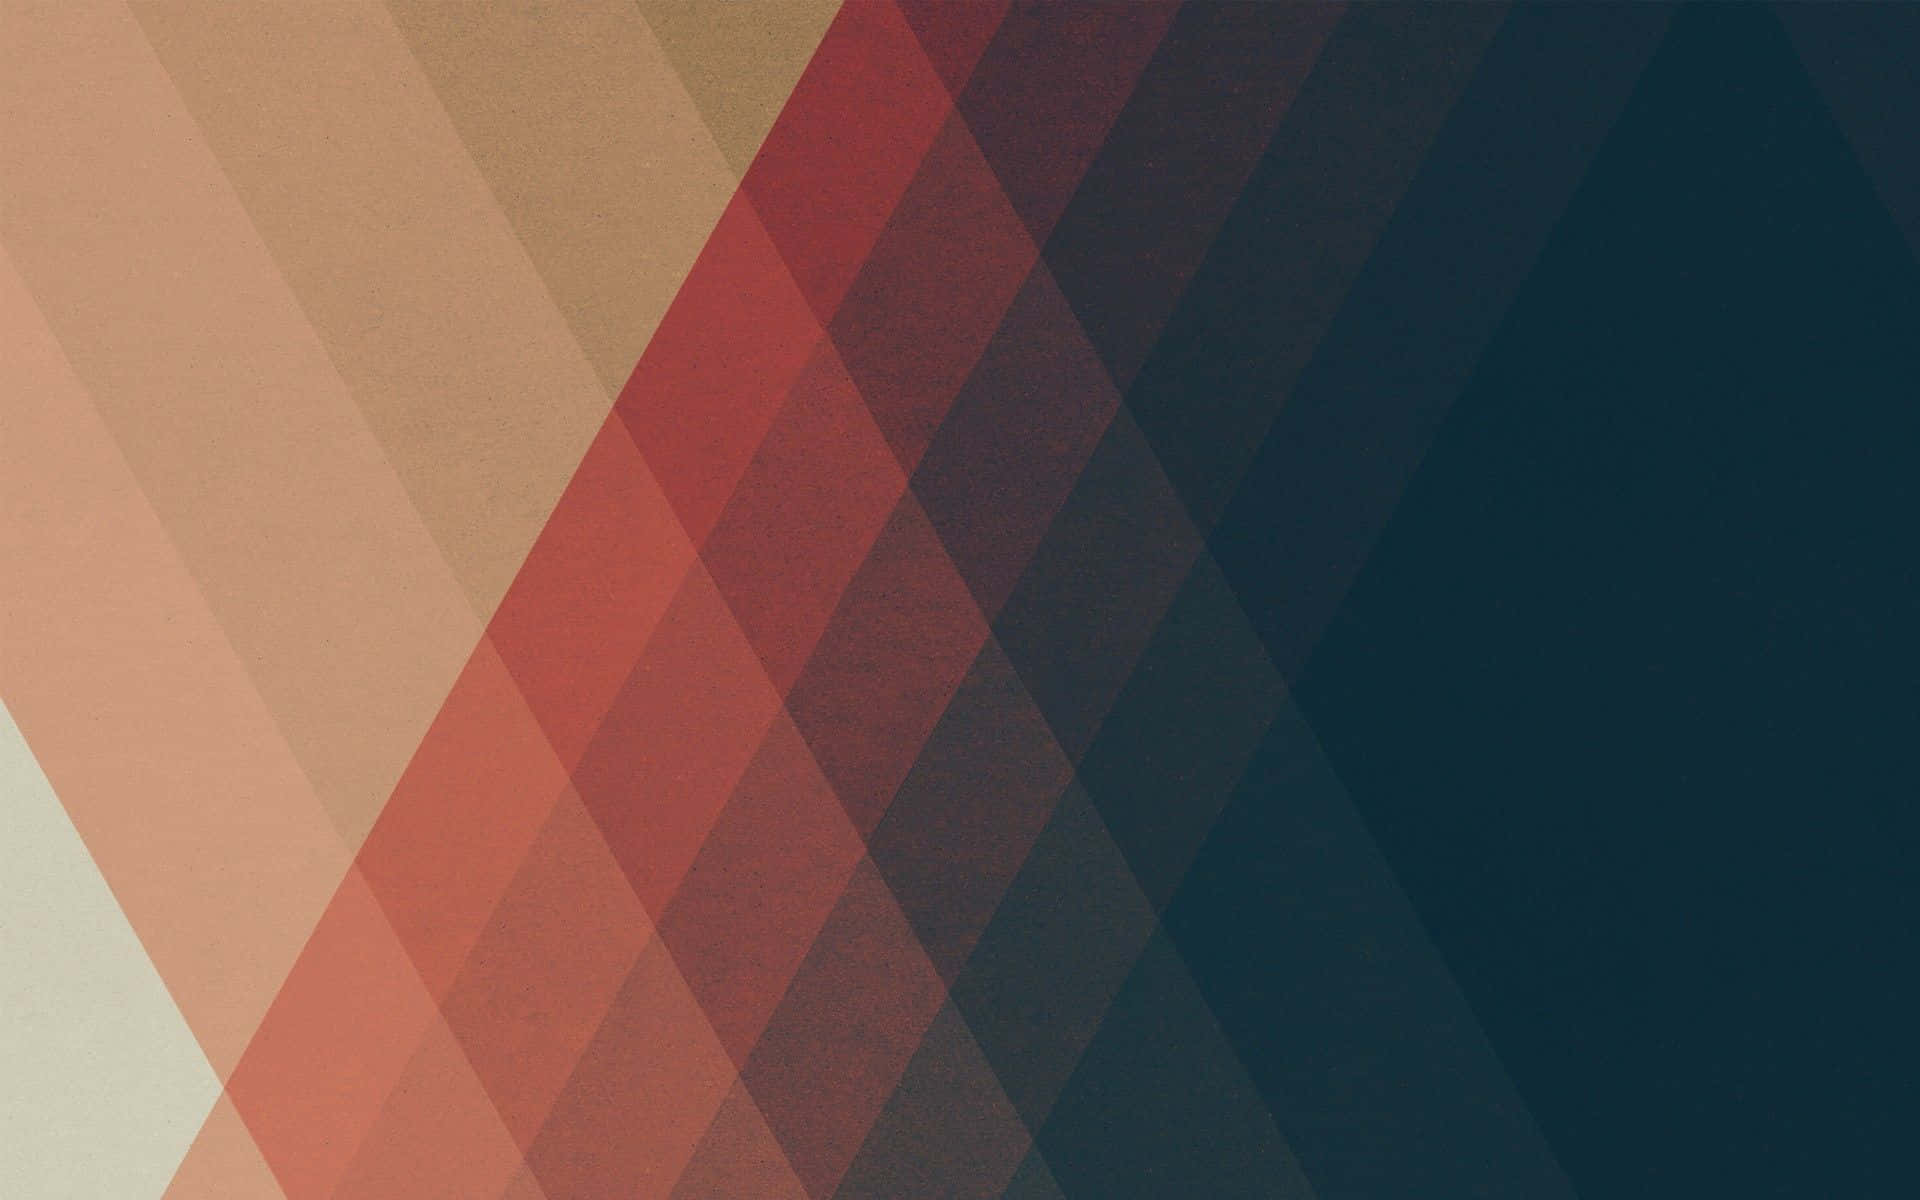 Minimalist Geometric Shapes on a Gradient Background Wallpaper